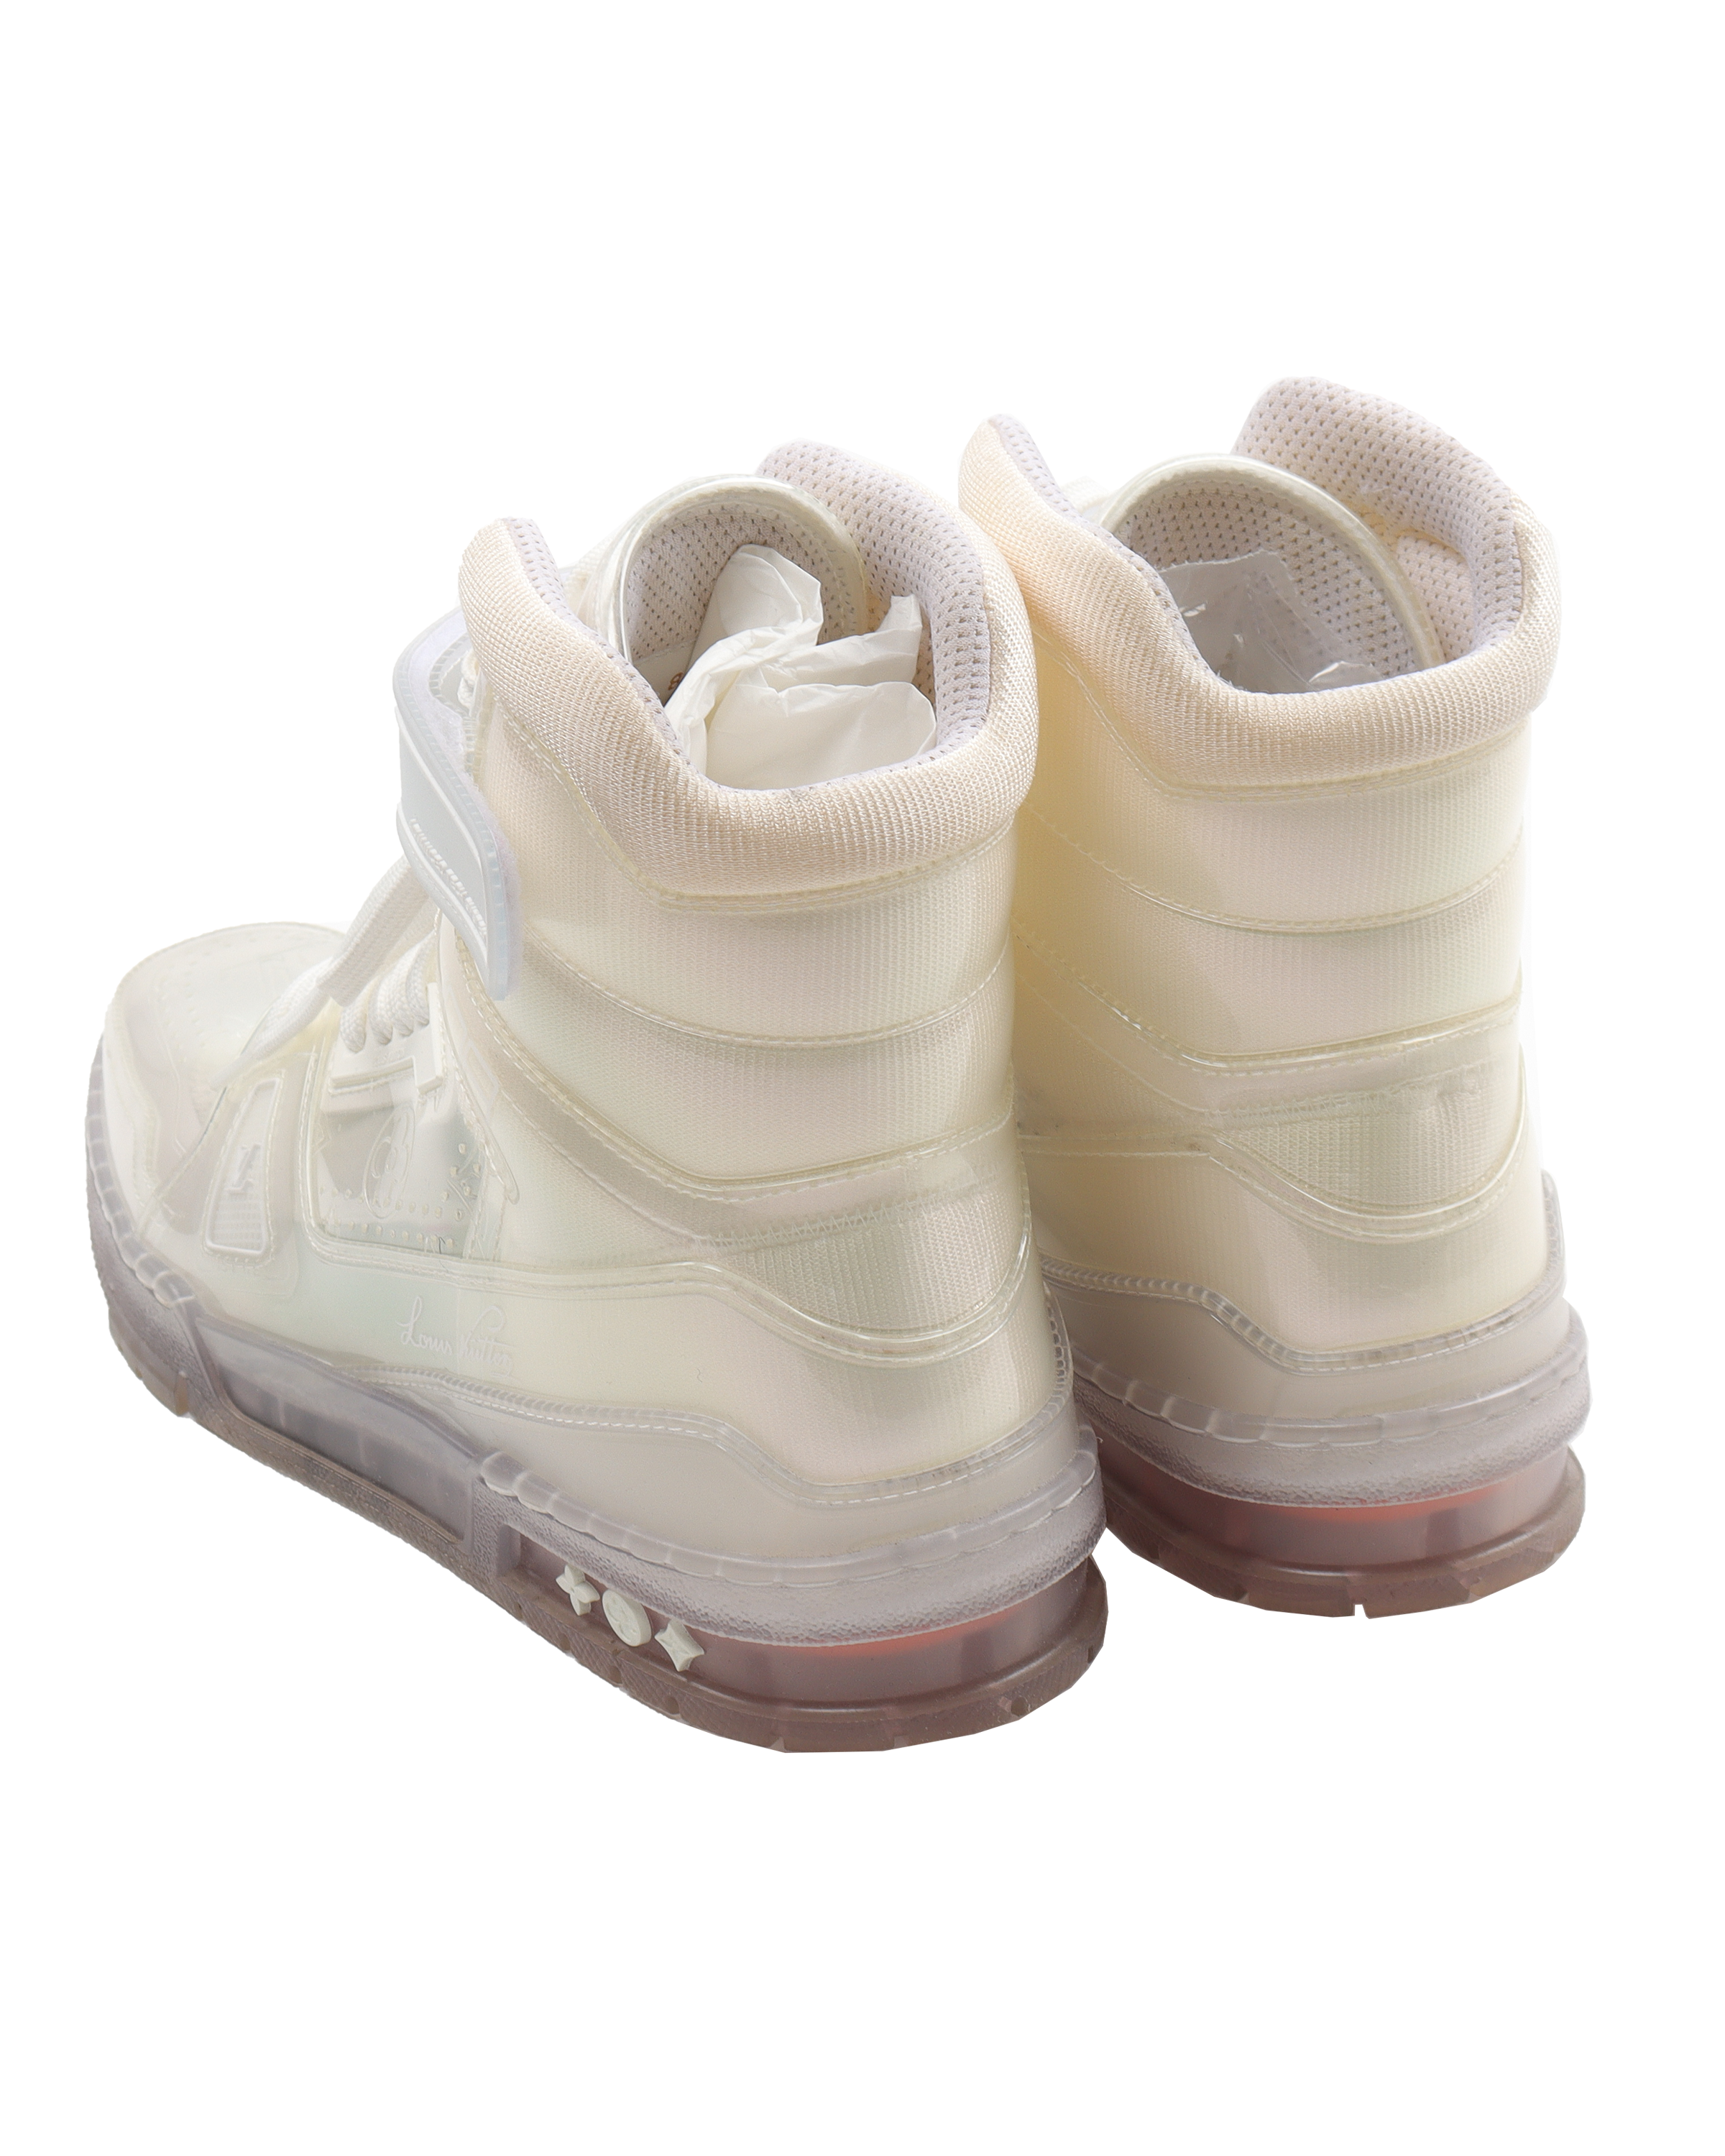 NWT Louis Vuitton Men's Transparent Clear Trainer Sneakers Strap 8 9  AUTHENTIC